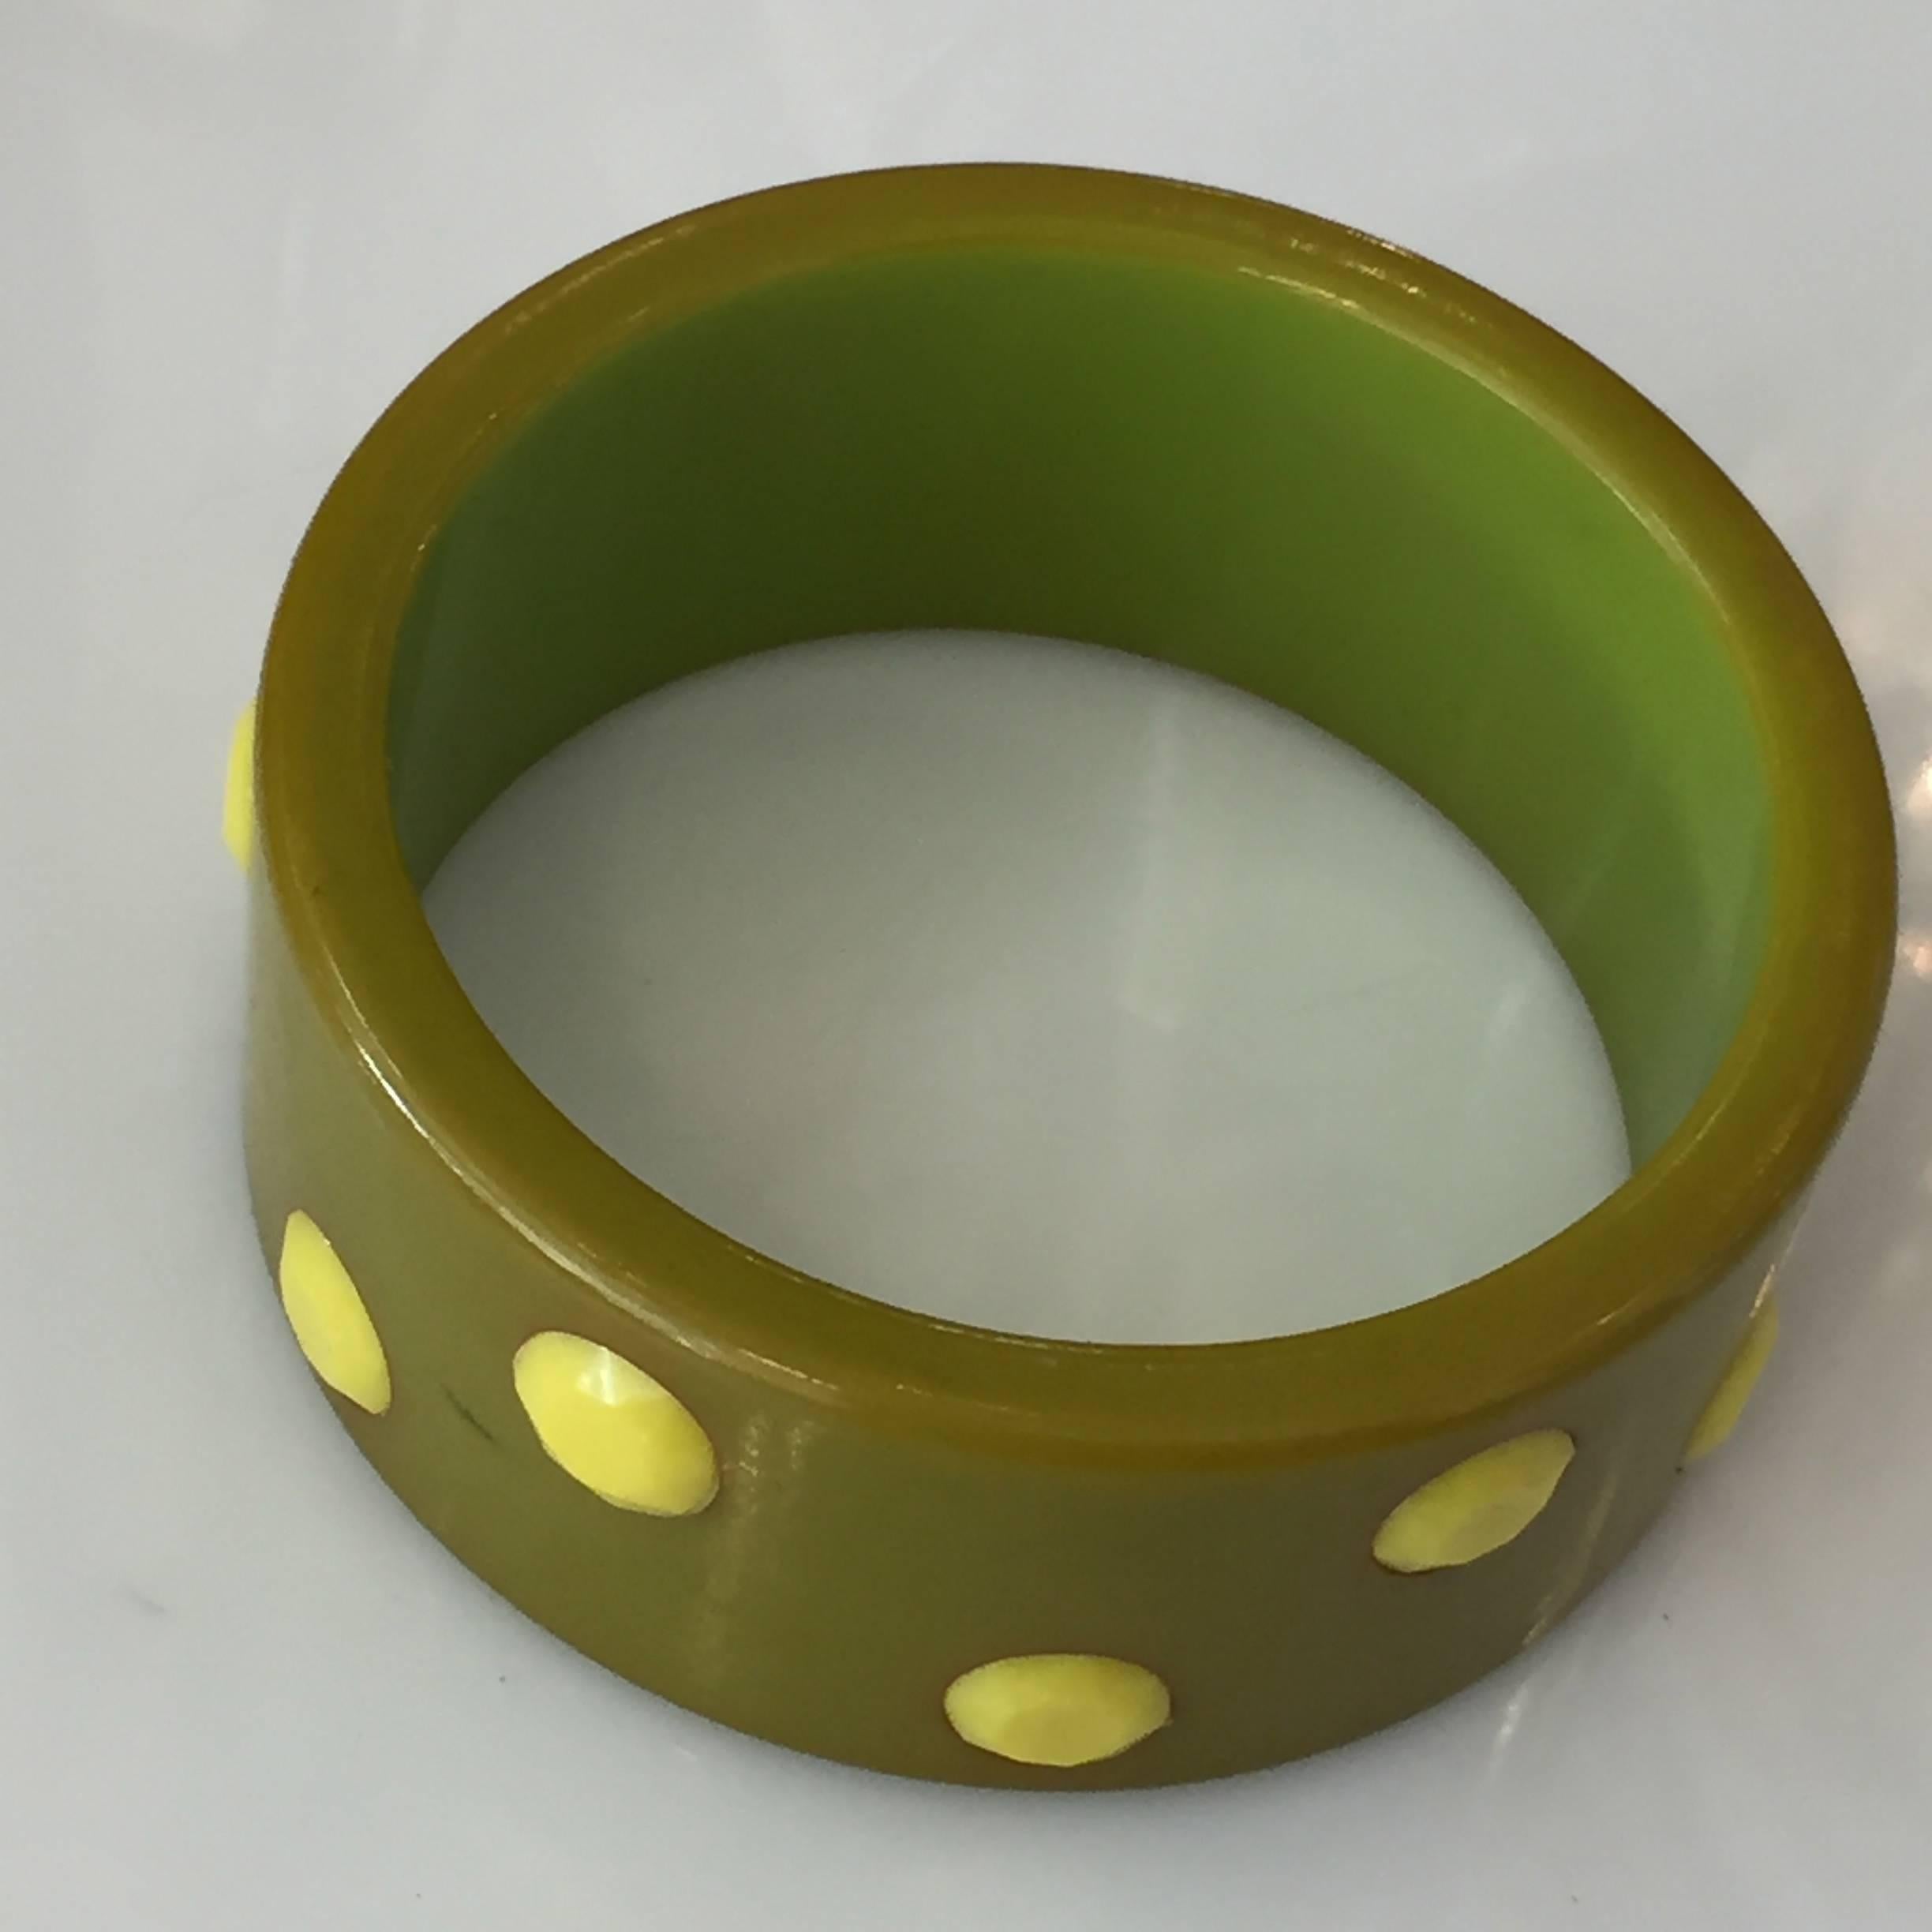 Art Deco Green and Yellow Polka Dot Celluloid Bakelite Bangle or Cuff Bracelet